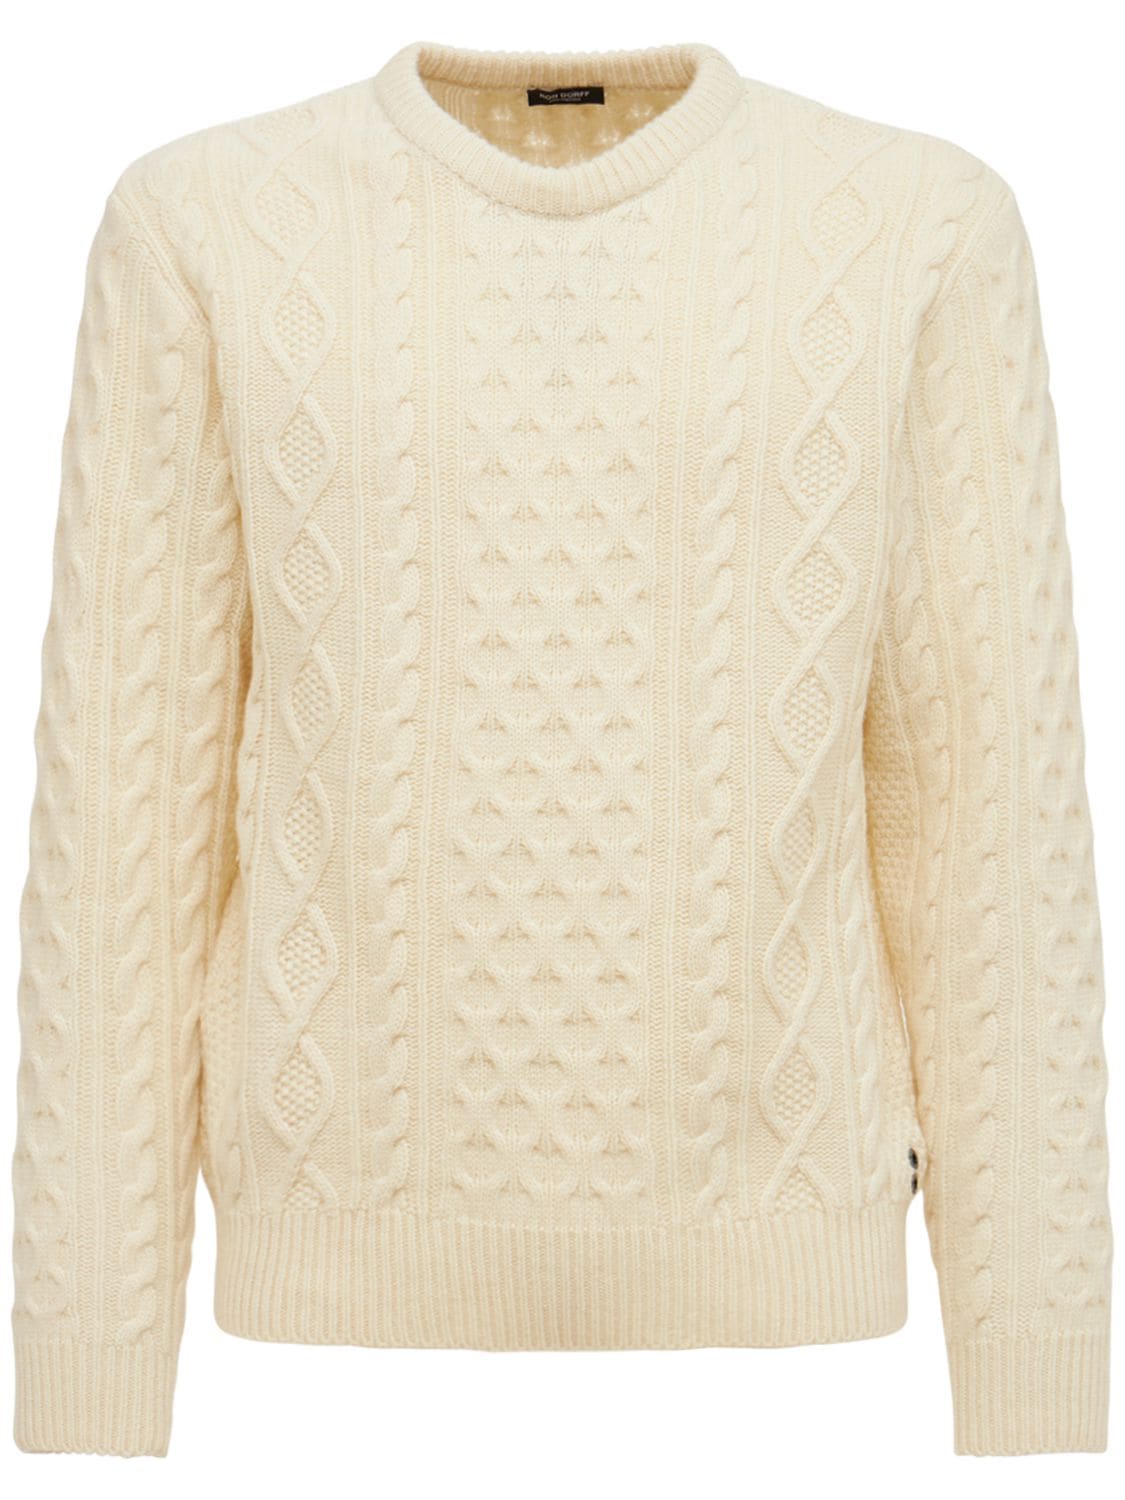 Ron Dorff Telemark Wool & Cashmere Knit Sweater In Off White | ModeSens